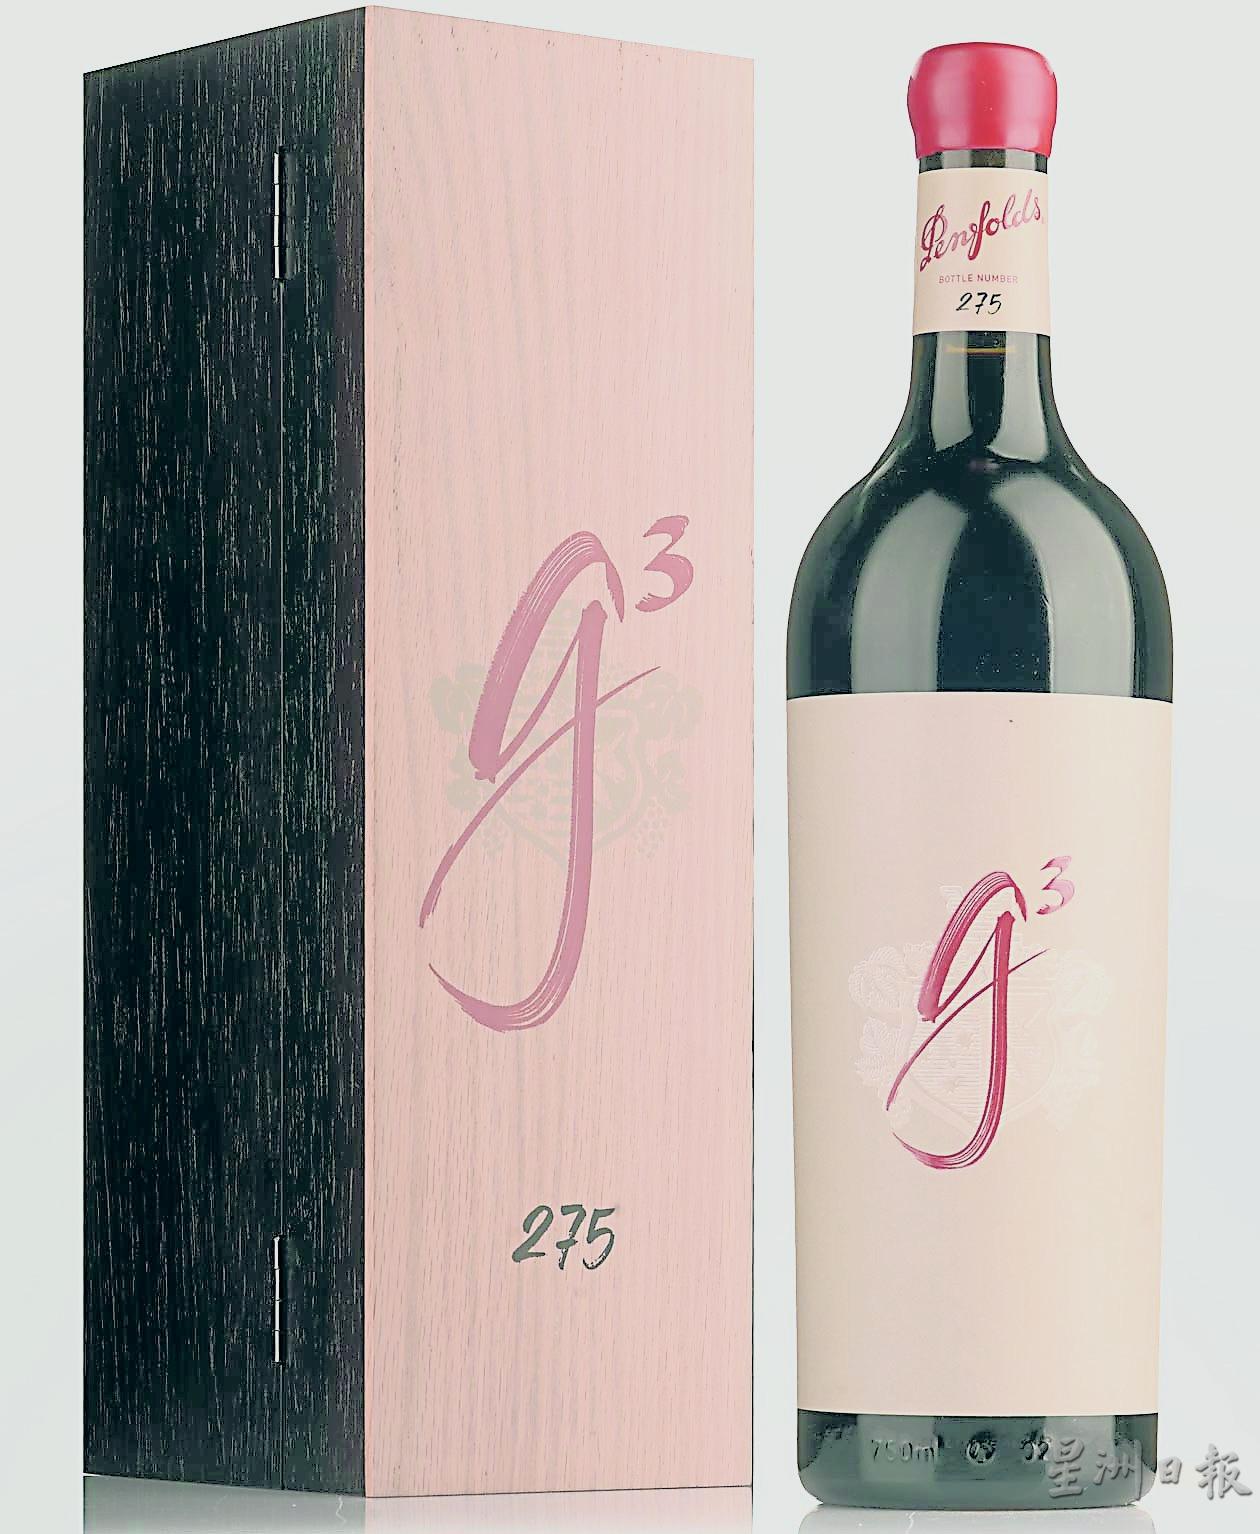 G3不但是奔富最具争议的葛兰许酒款，价格也超过了组成它的任何一款葛兰许售价。